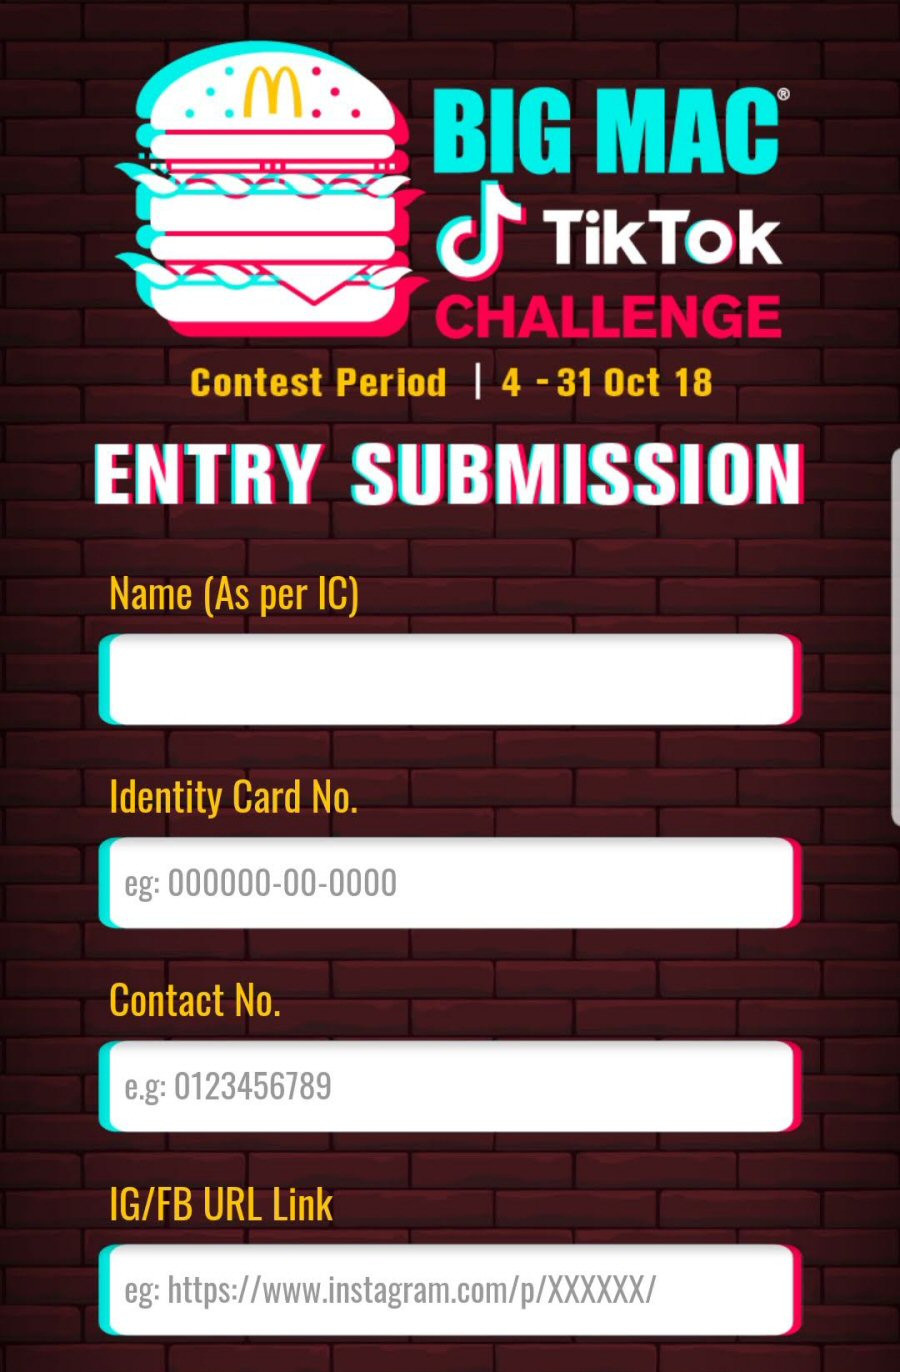 Big Mac x TikTok Challenge: How to submit entry?